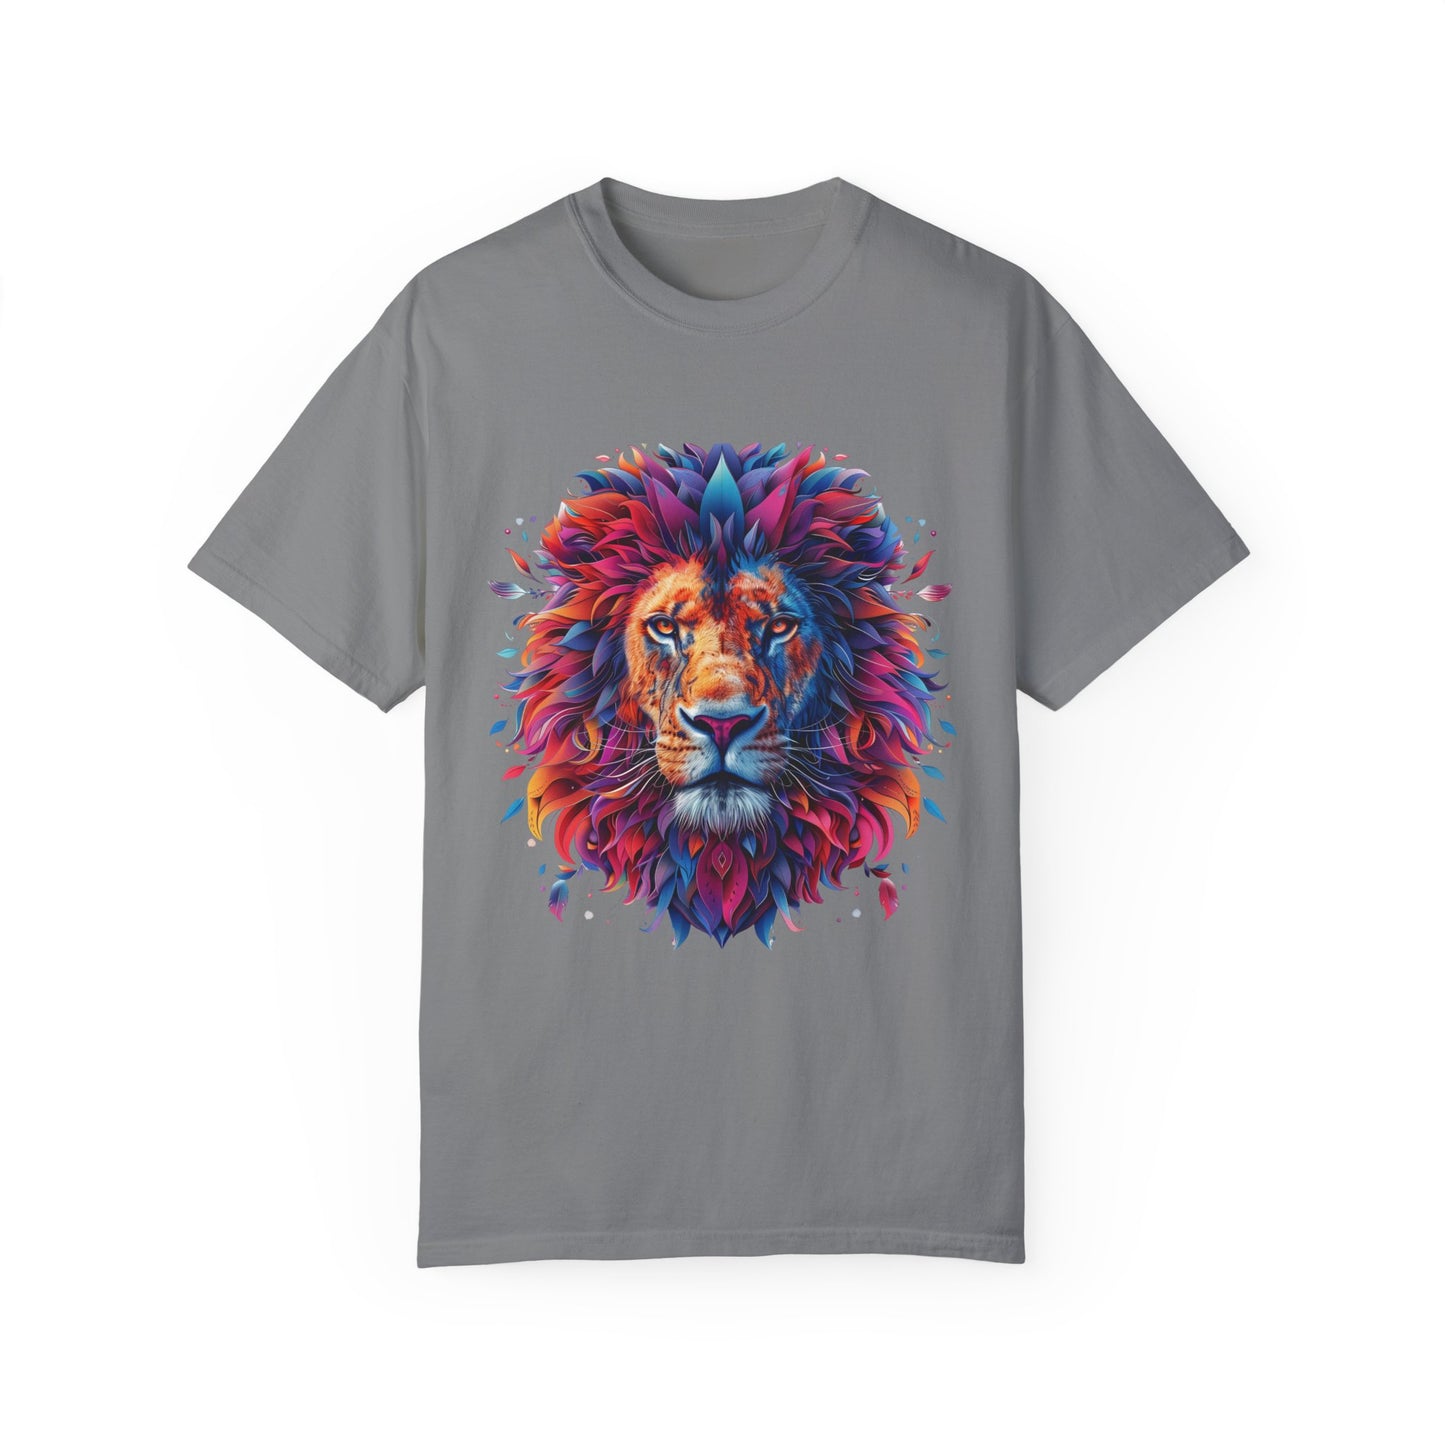 Lion Head Cool Graphic Design Novelty Unisex Garment-dyed T-shirt Cotton Funny Humorous Graphic Soft Premium Unisex Men Women Grey T-shirt Birthday Gift-9